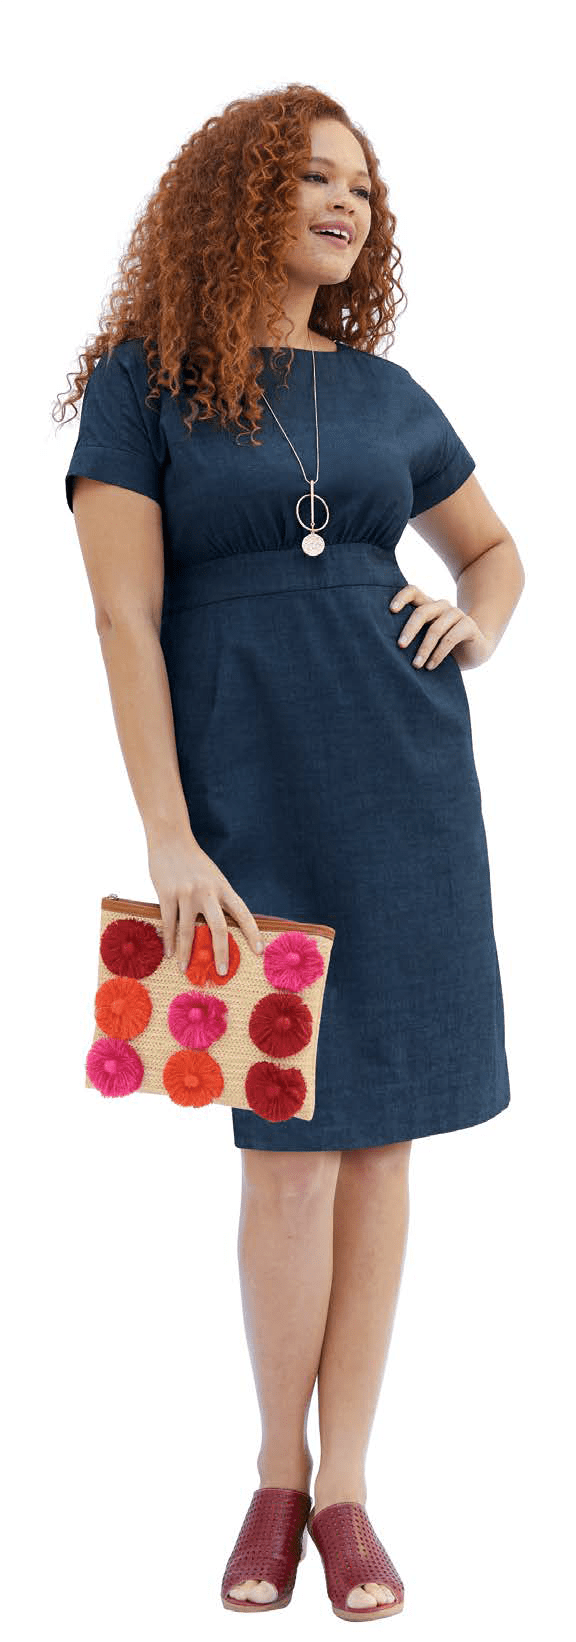 Woman wearing Denim Dress carrying colorful clutch